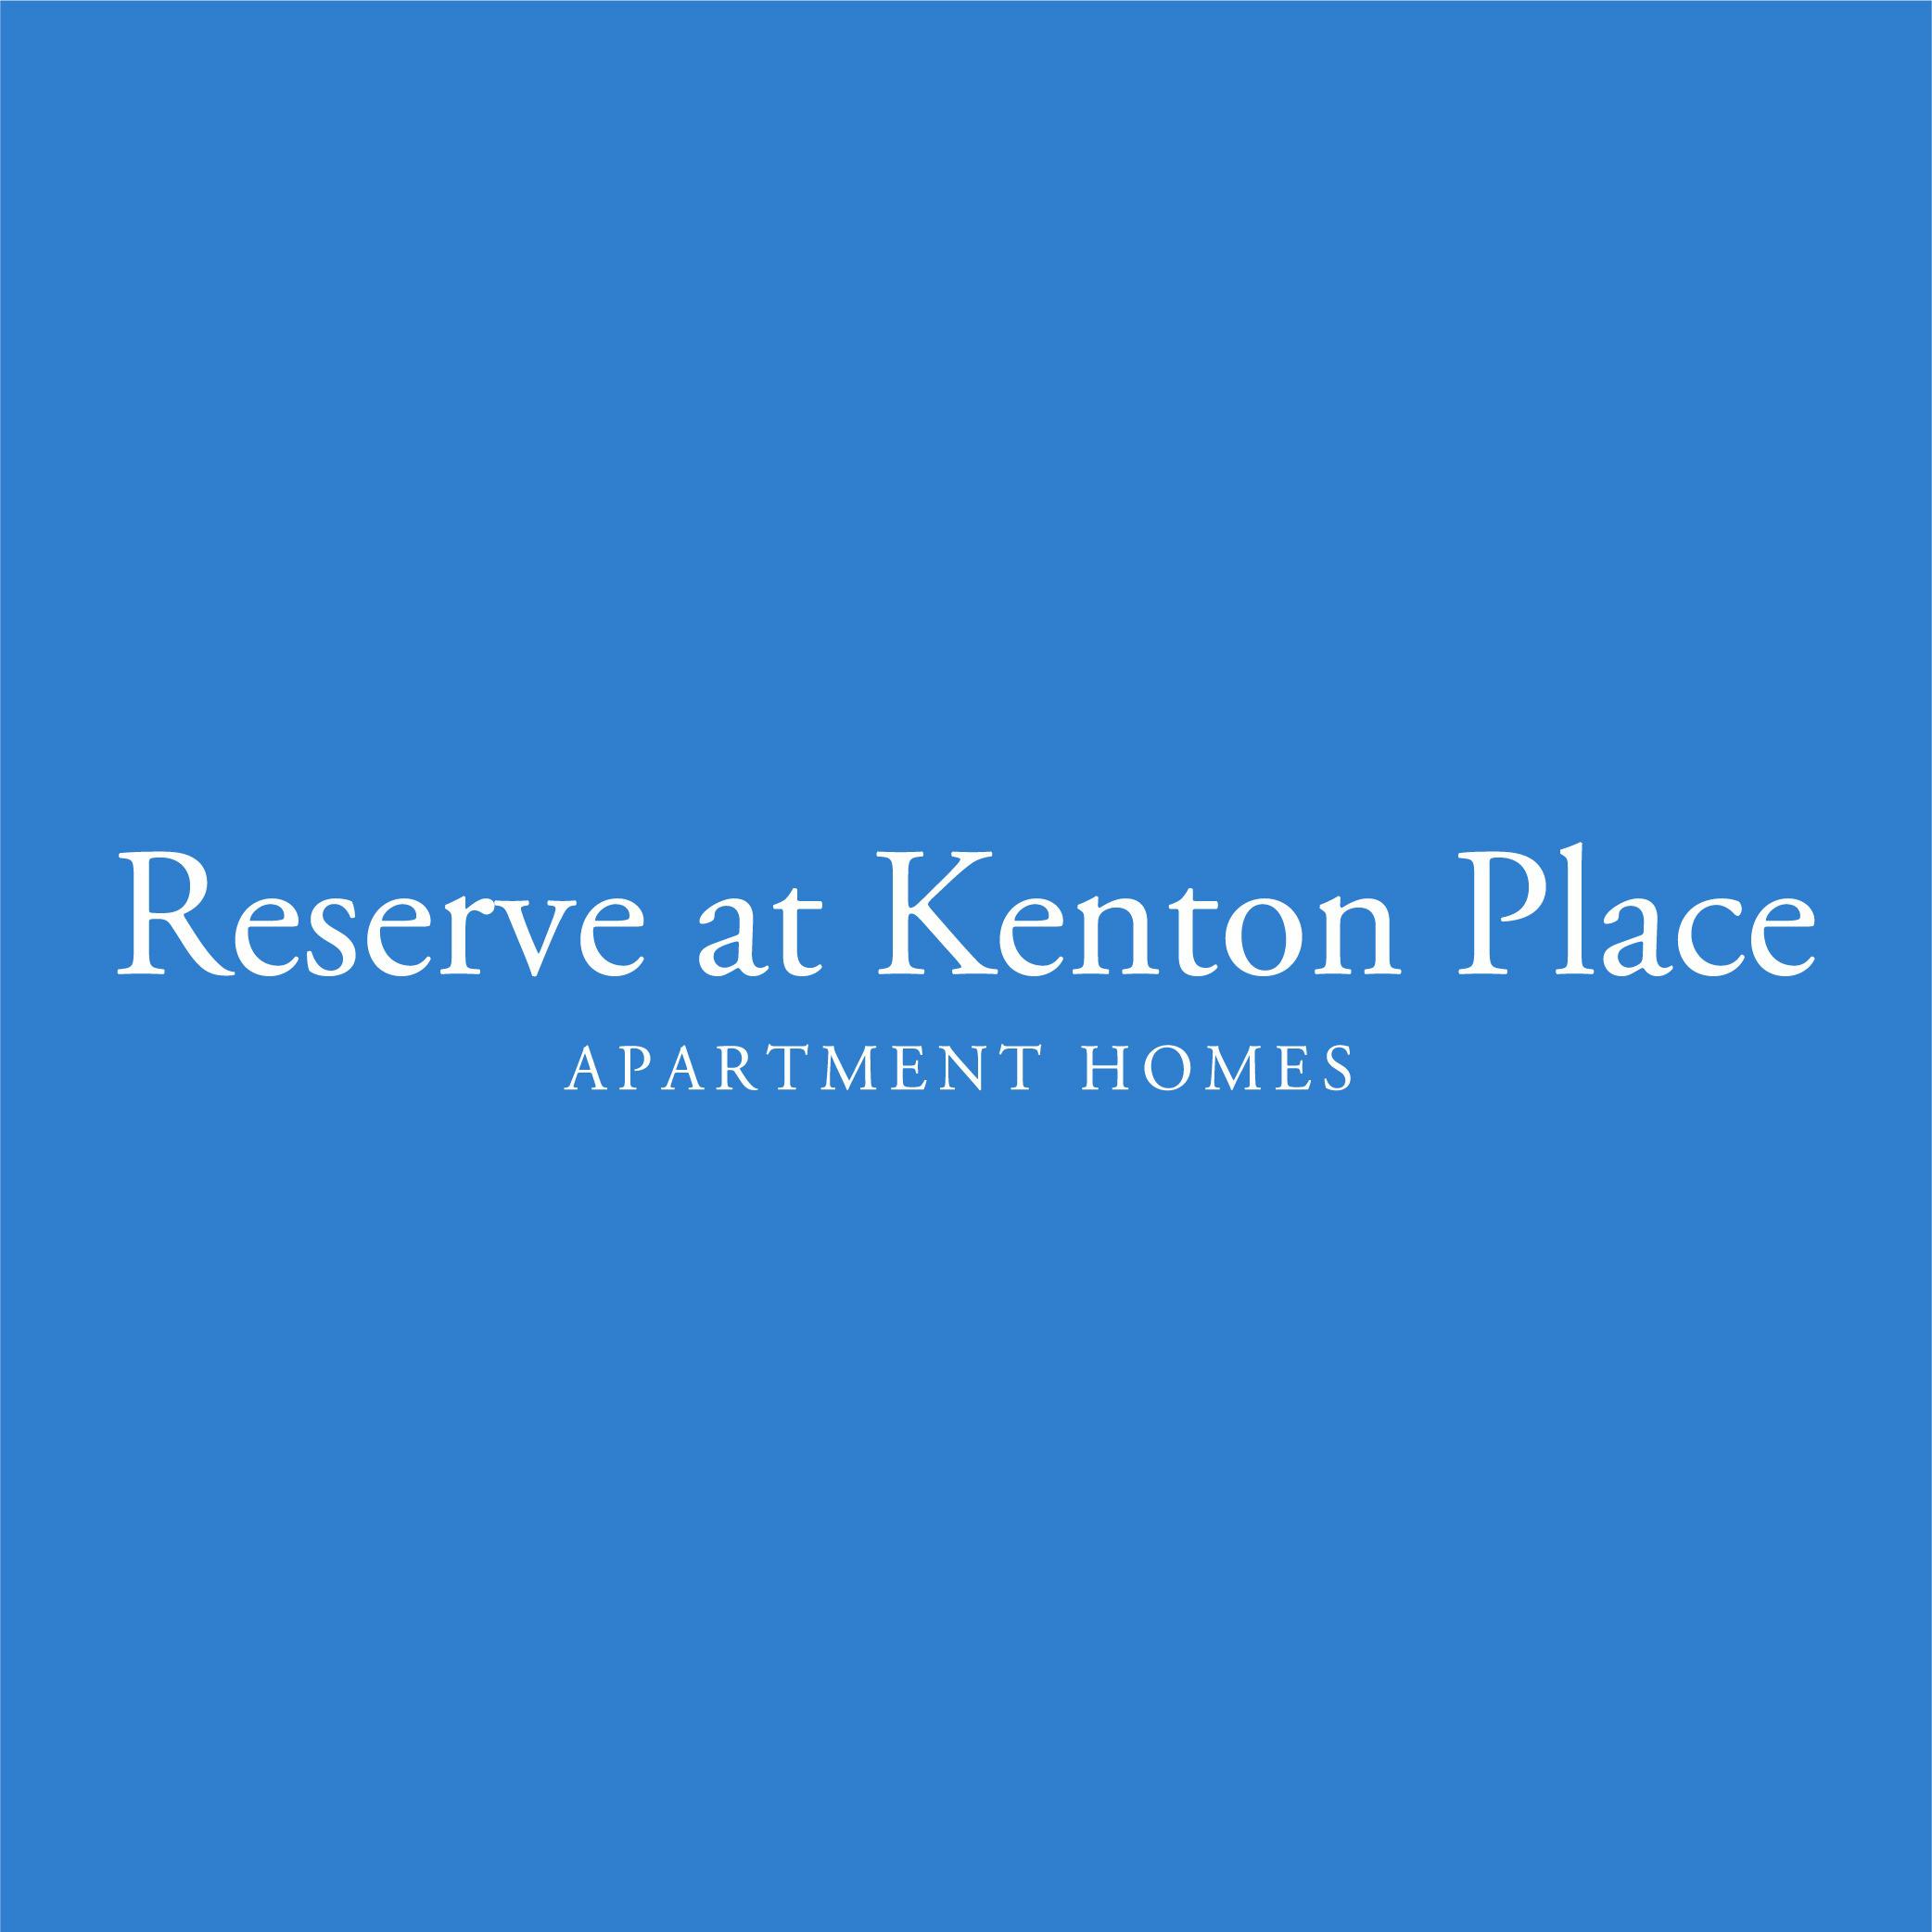 Reserve at Kenton Place Apartment Homes Cornelius (704)765-1456